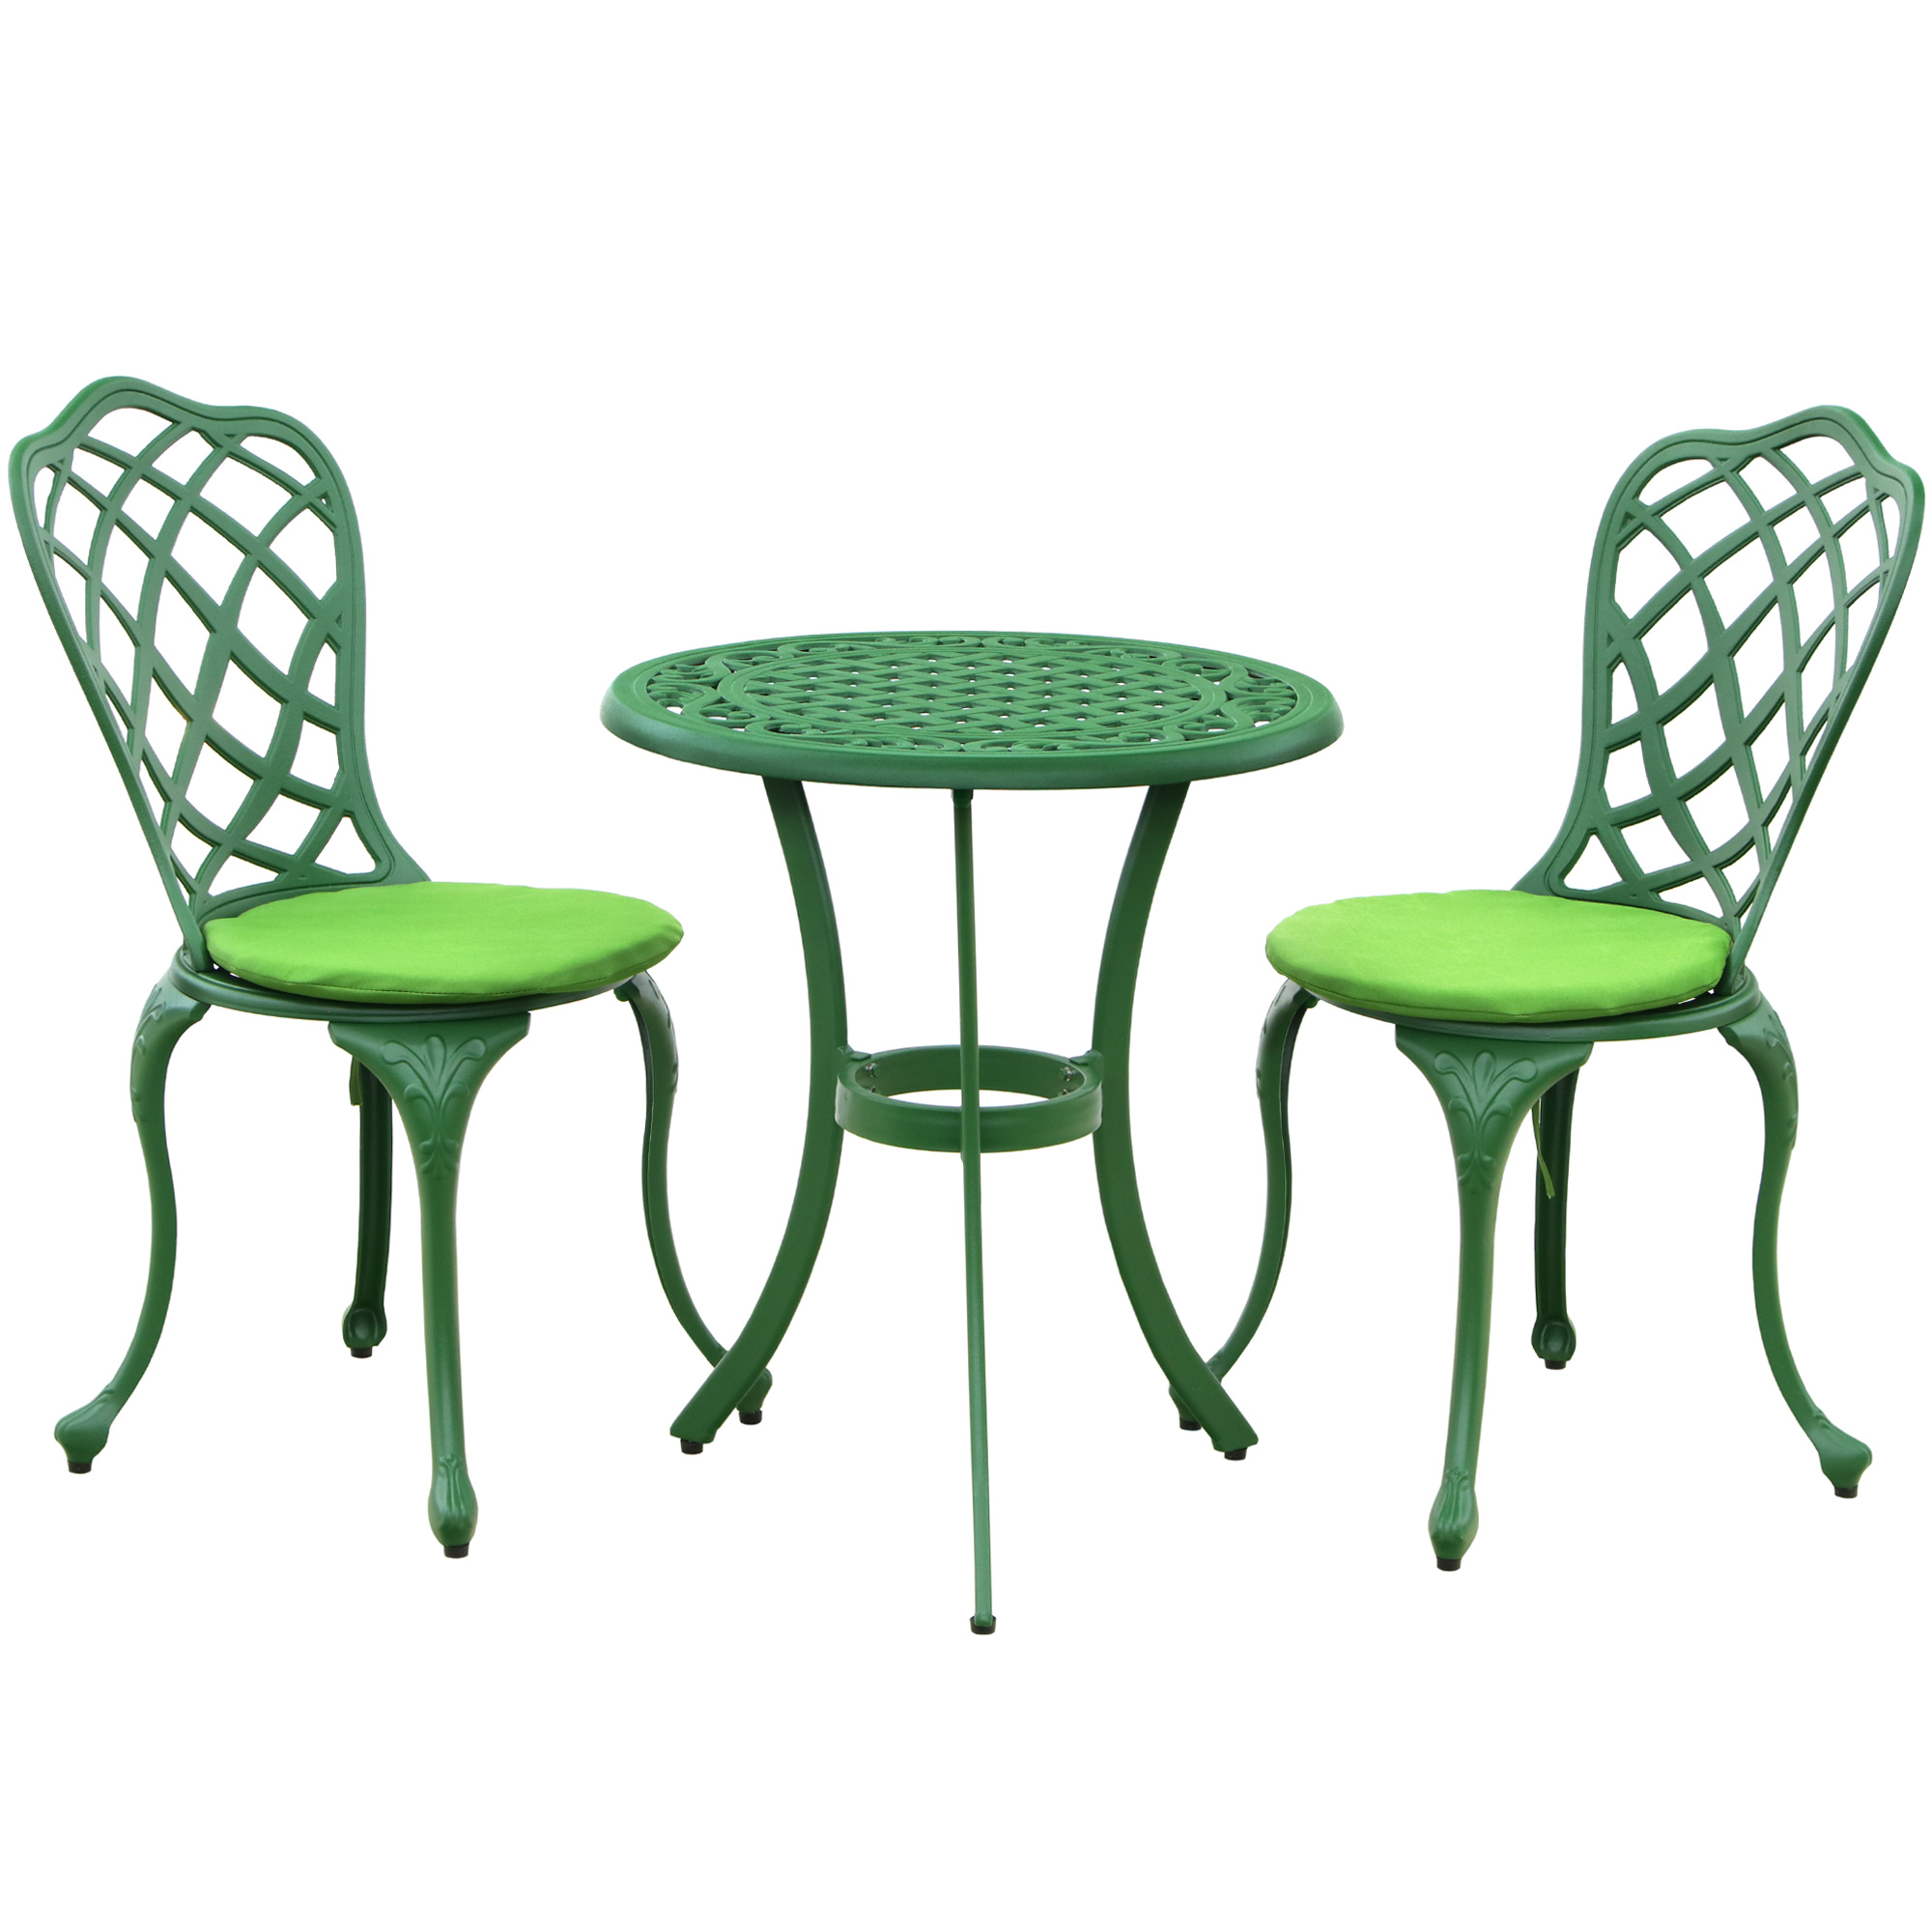 Комплект мебели Linyi 3 предмета, цвет зеленый, размер 60,5х60,5х66 см - фото 1